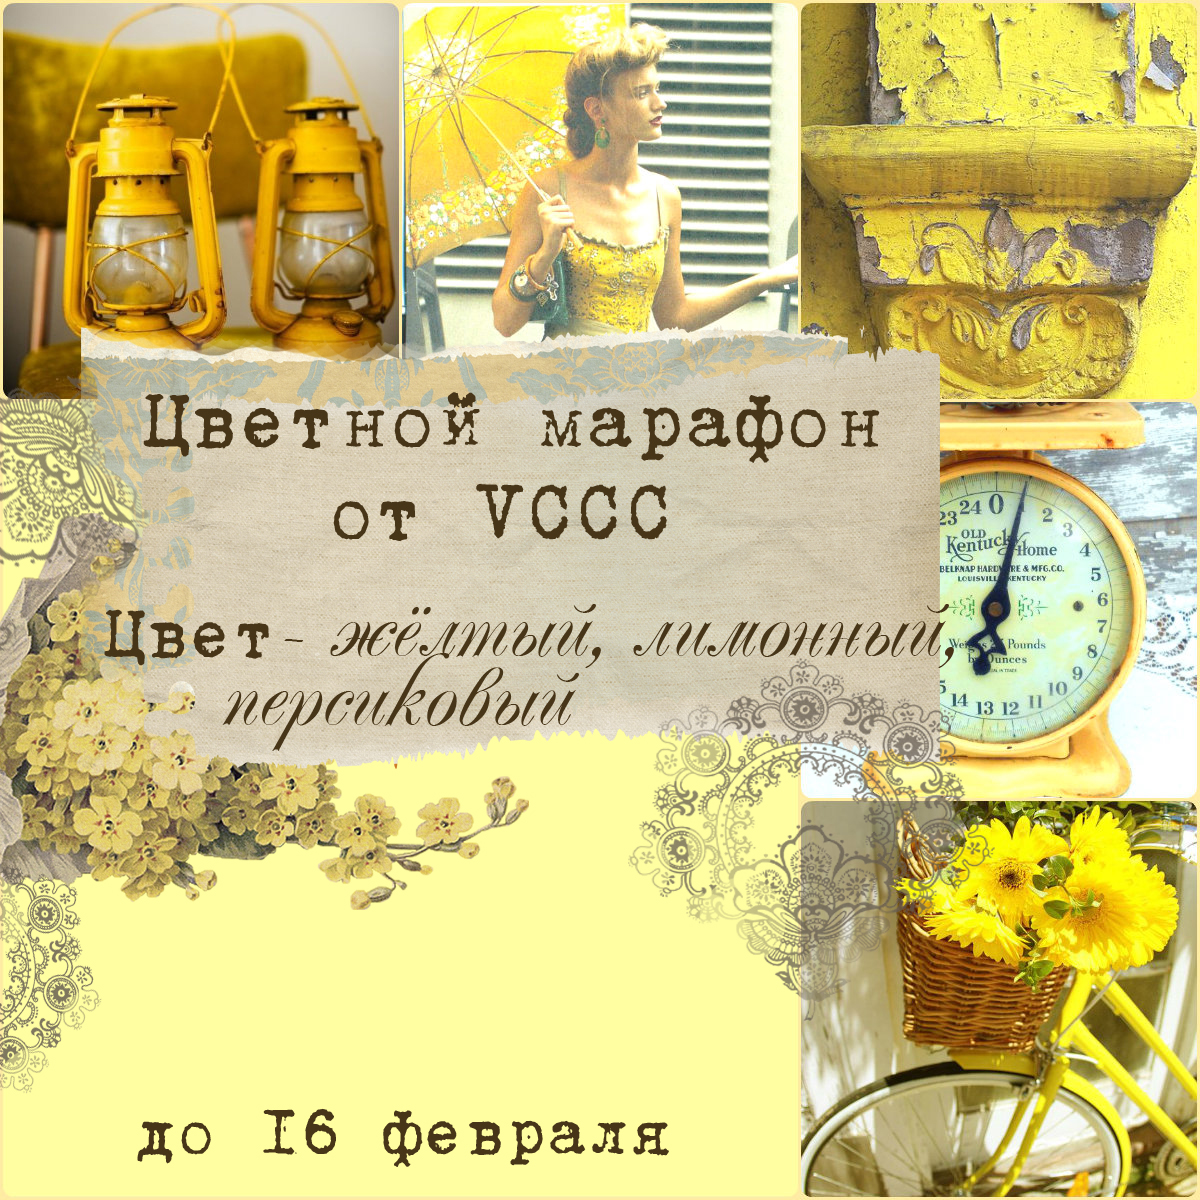 http://vintagecafecard.blogspot.ru/2015/02/2.html